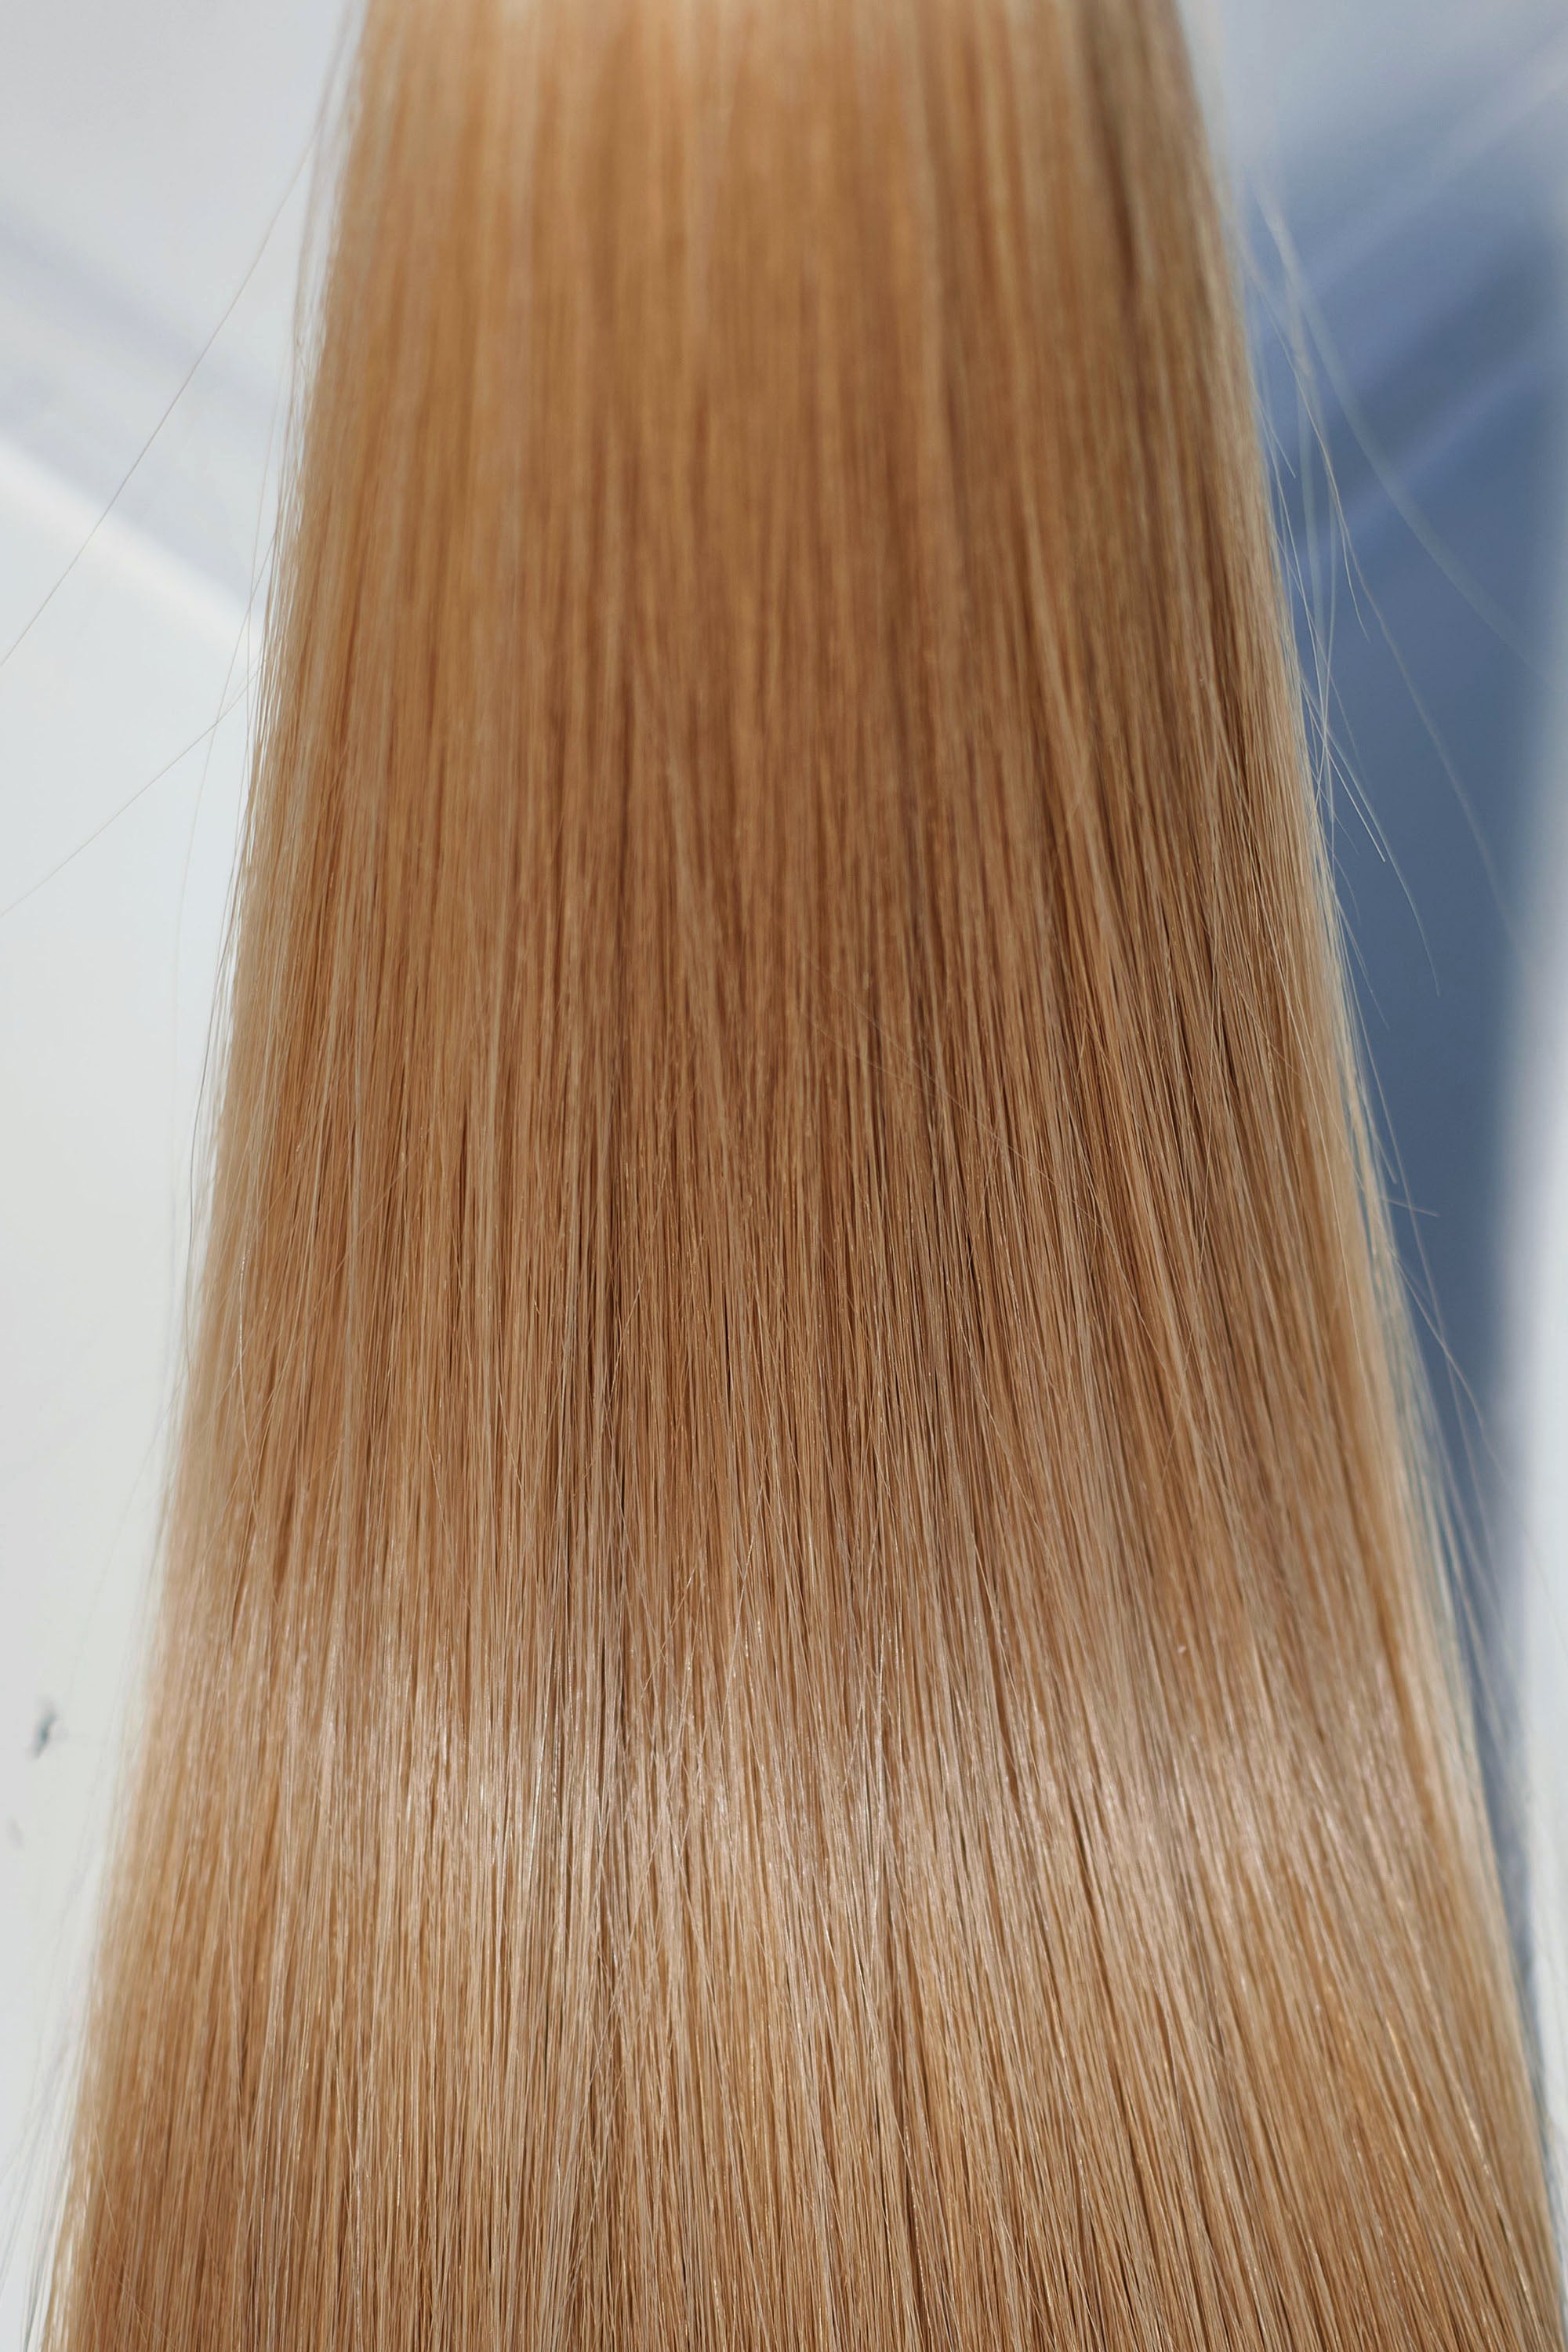 Behair professional Keratin Tip "Premium" 16" (40cm) Natural Straight Gold Sand #18 - 25g (Standart - 0.7g each pcs) hair extensions